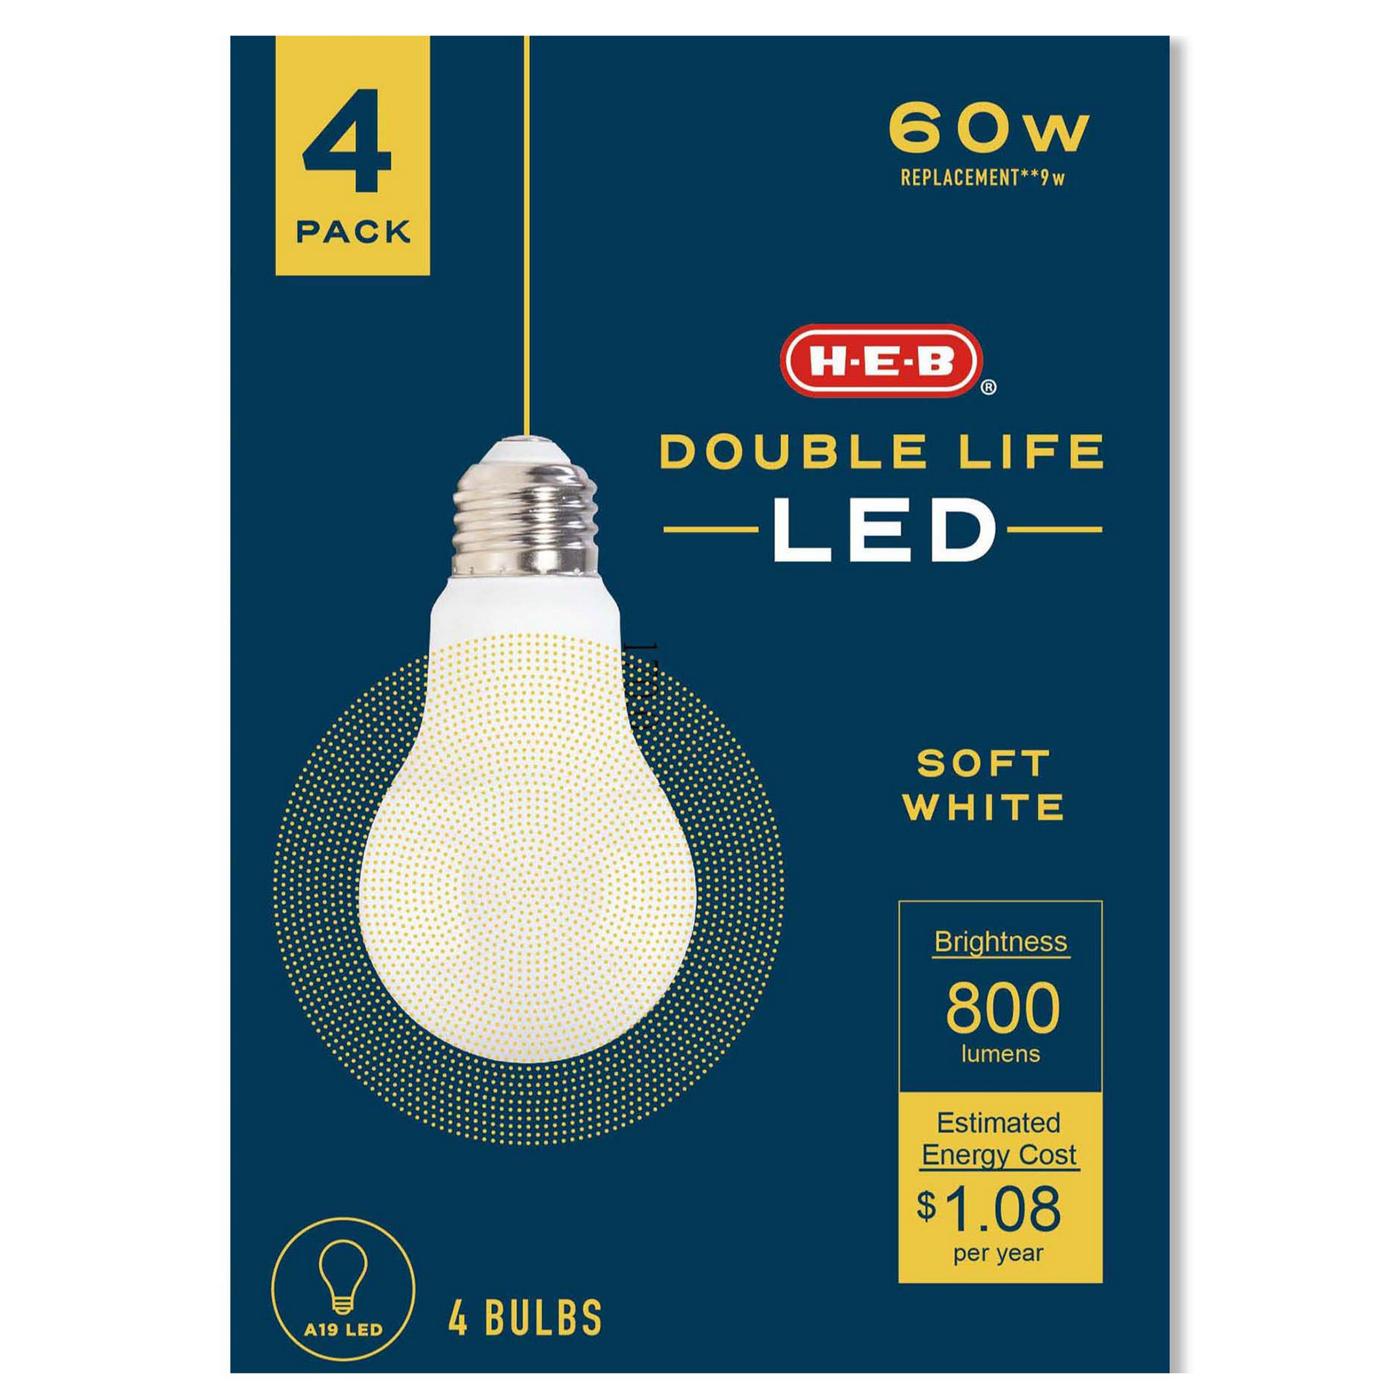 H-E-B Double Life A19 60-Watt LED Light Bulbs - Soft White; image 1 of 2